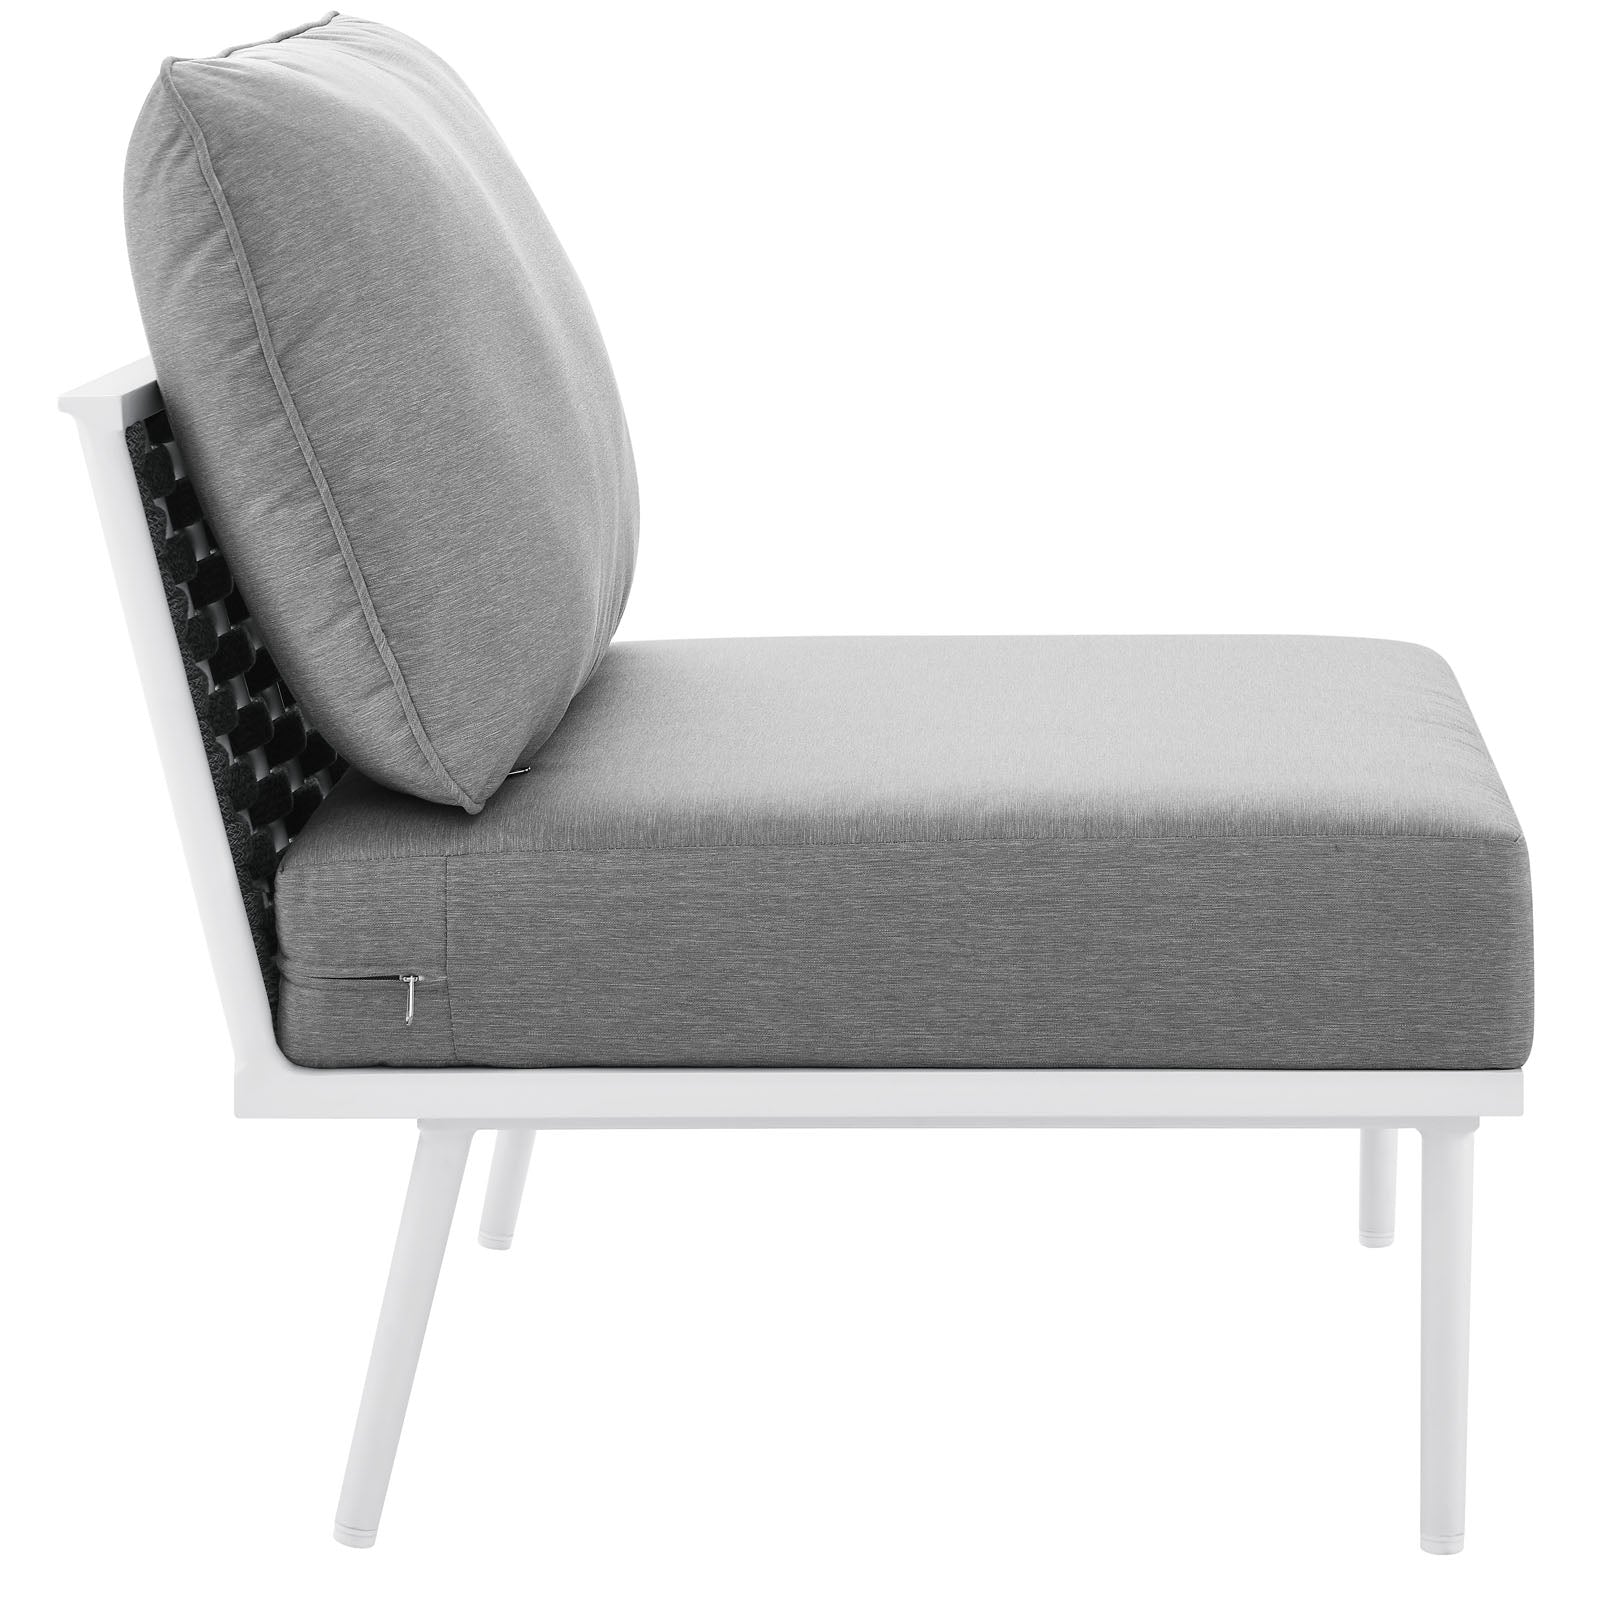 Modway - Stance Outdoor Patio Aluminum Armless Chair - EEI-5568